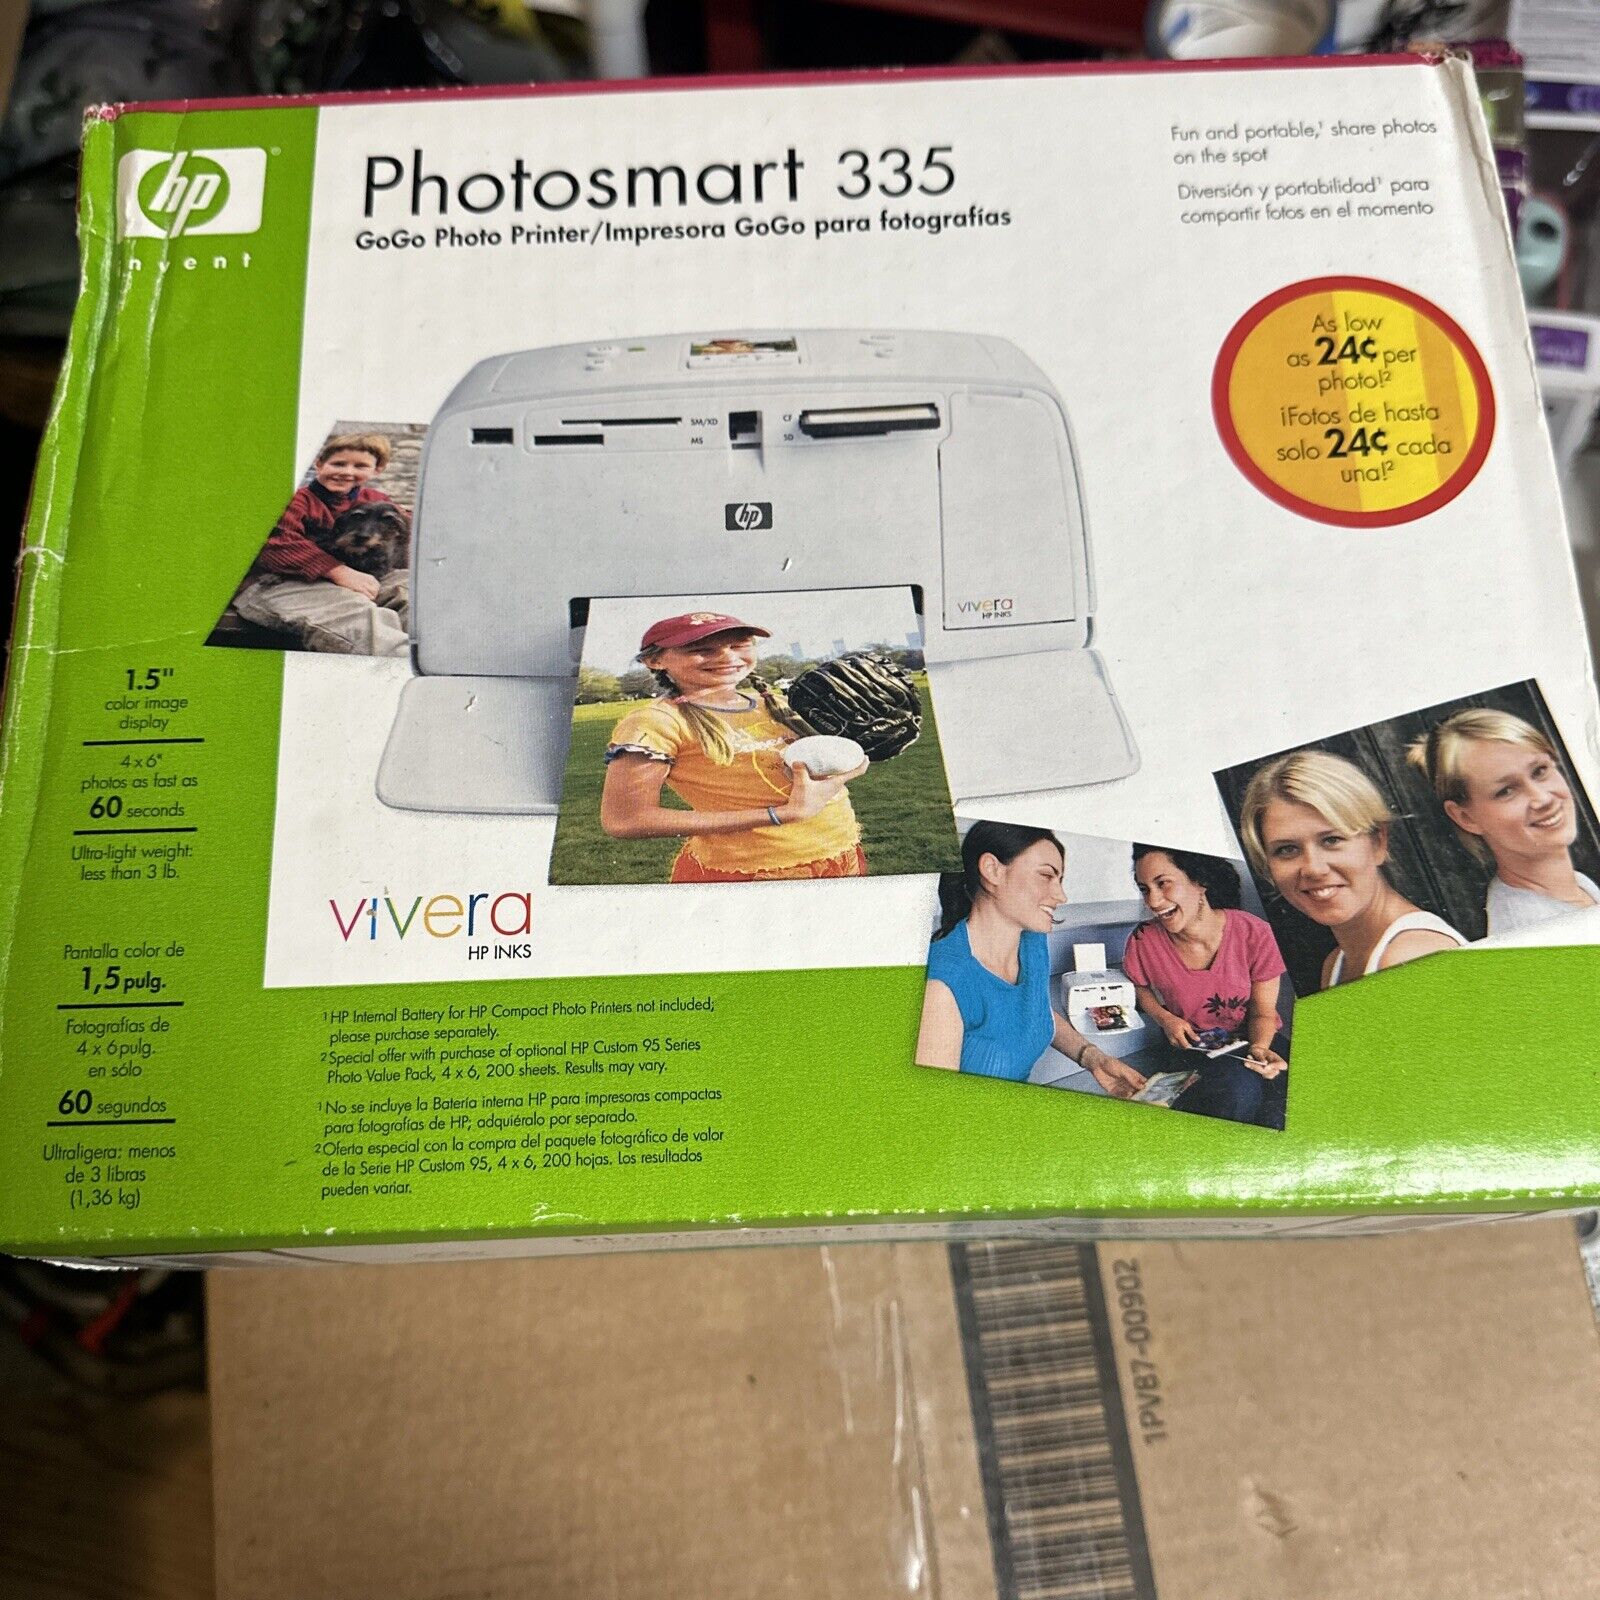 New Sealed HP Invent Photosmart 335 Gogo Photo Printer